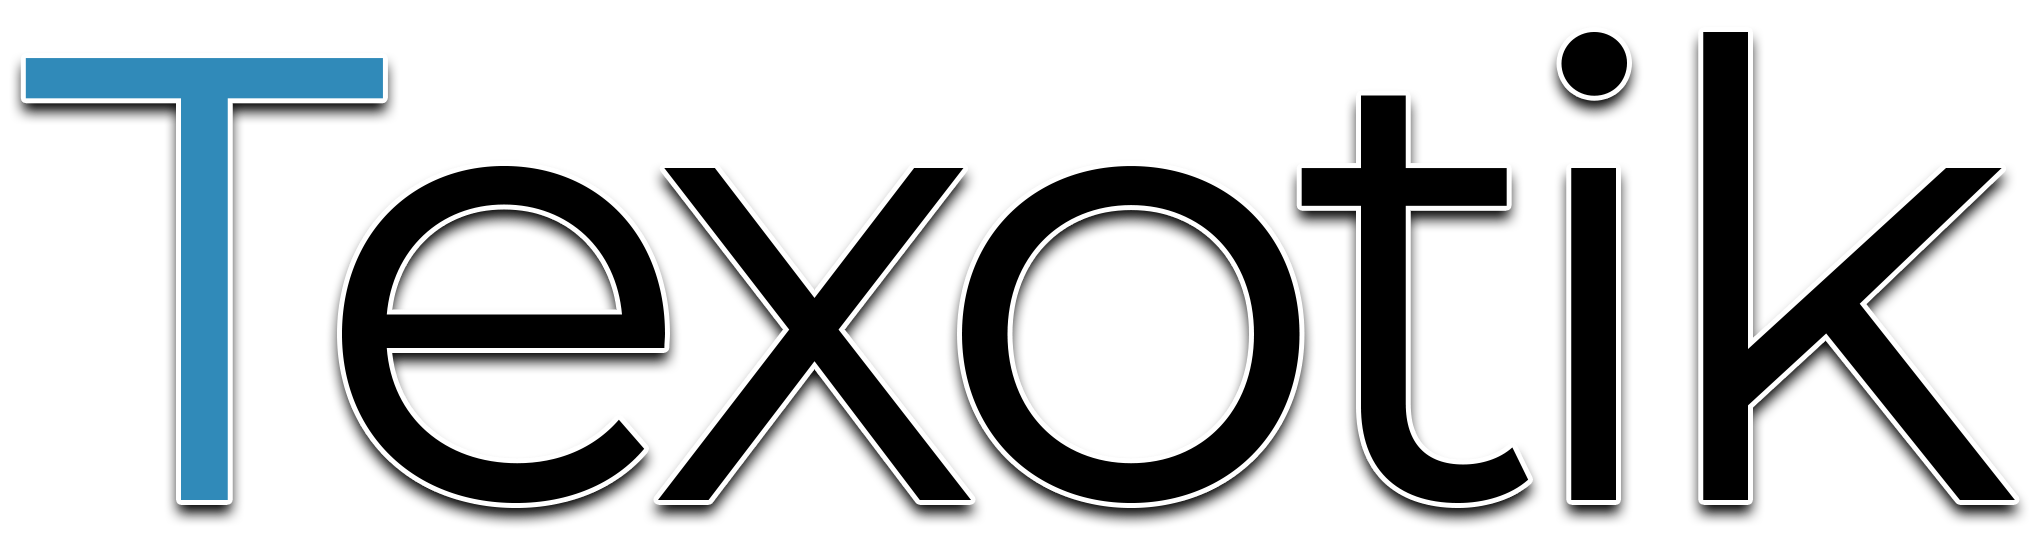 Texotik Logo